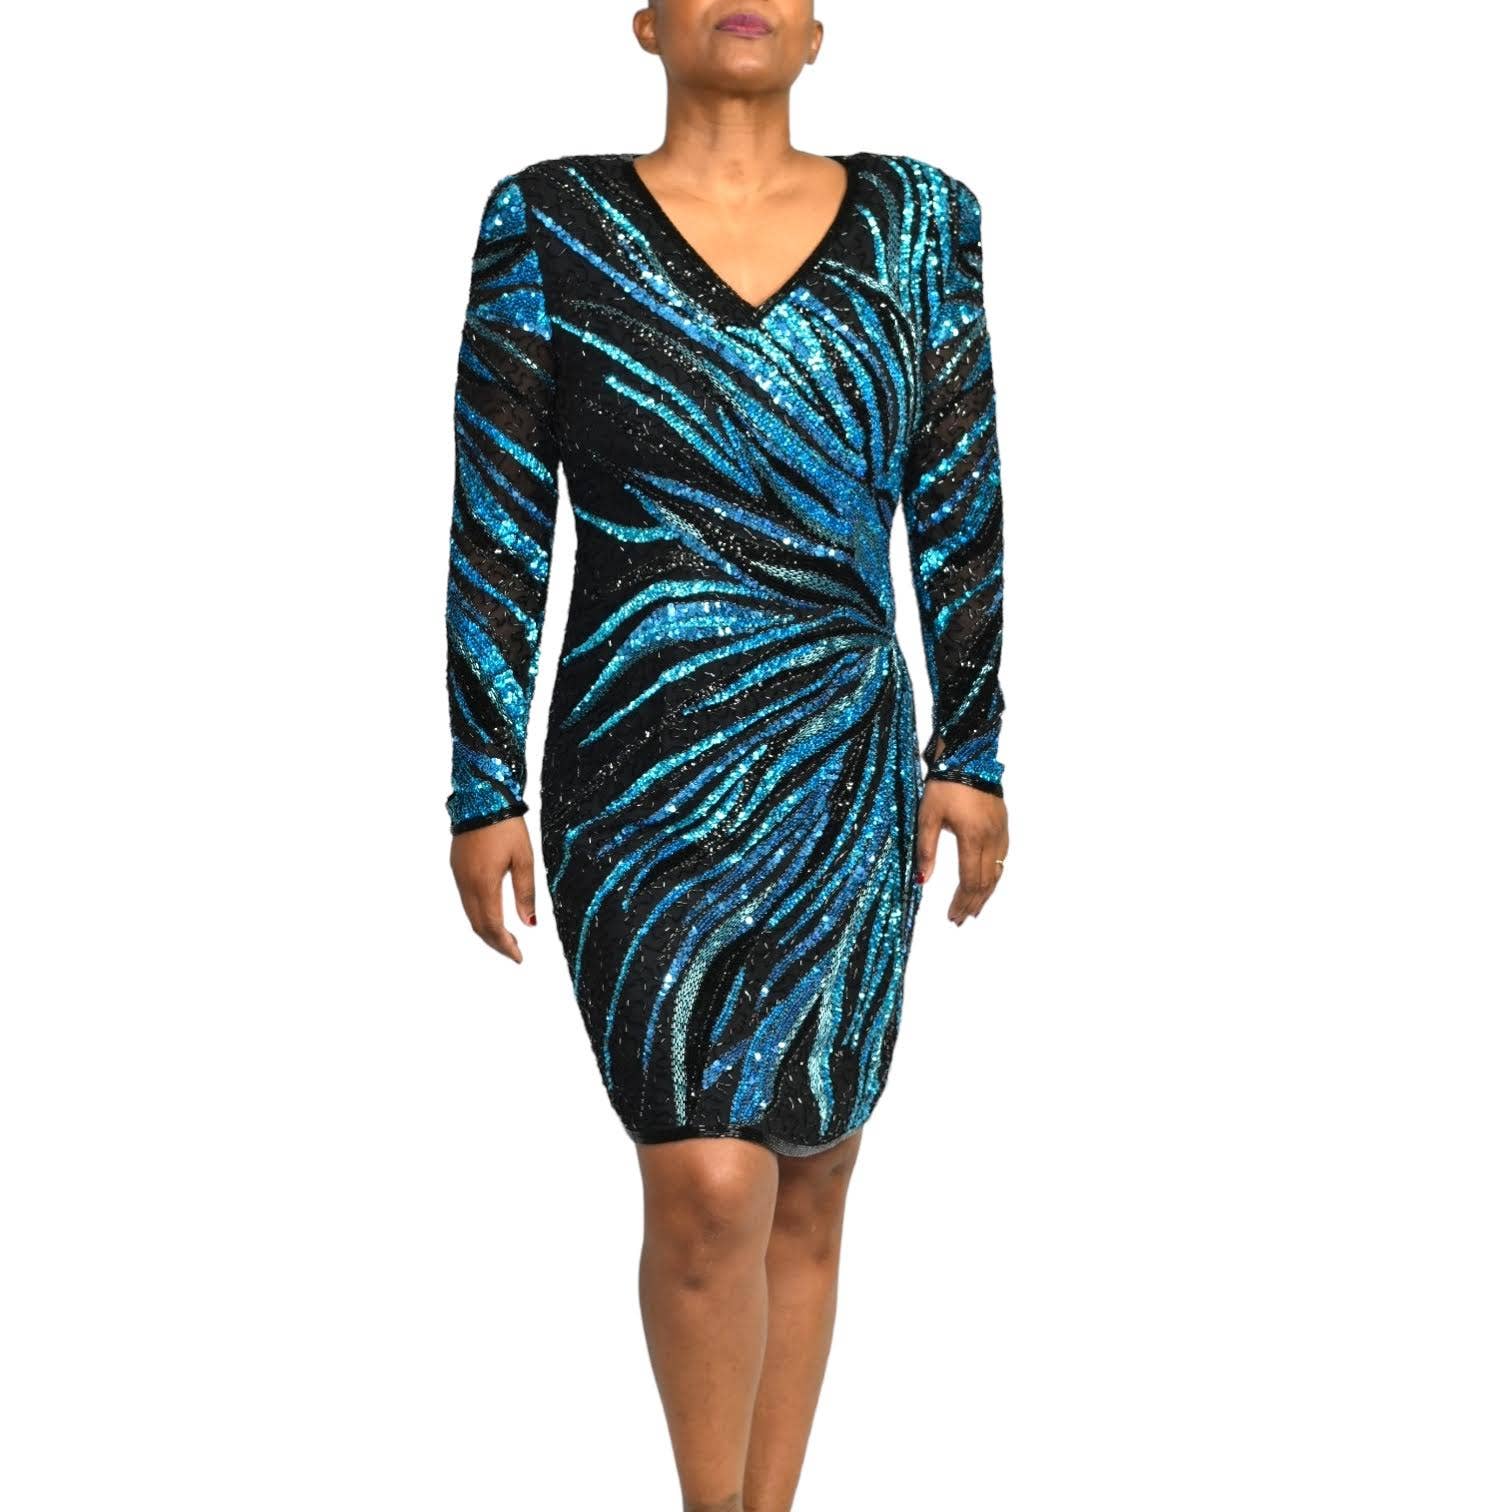 Vintage Sequin Dress Joan Leslie Evening Wear Party Beaded Silk Sheath Size 8